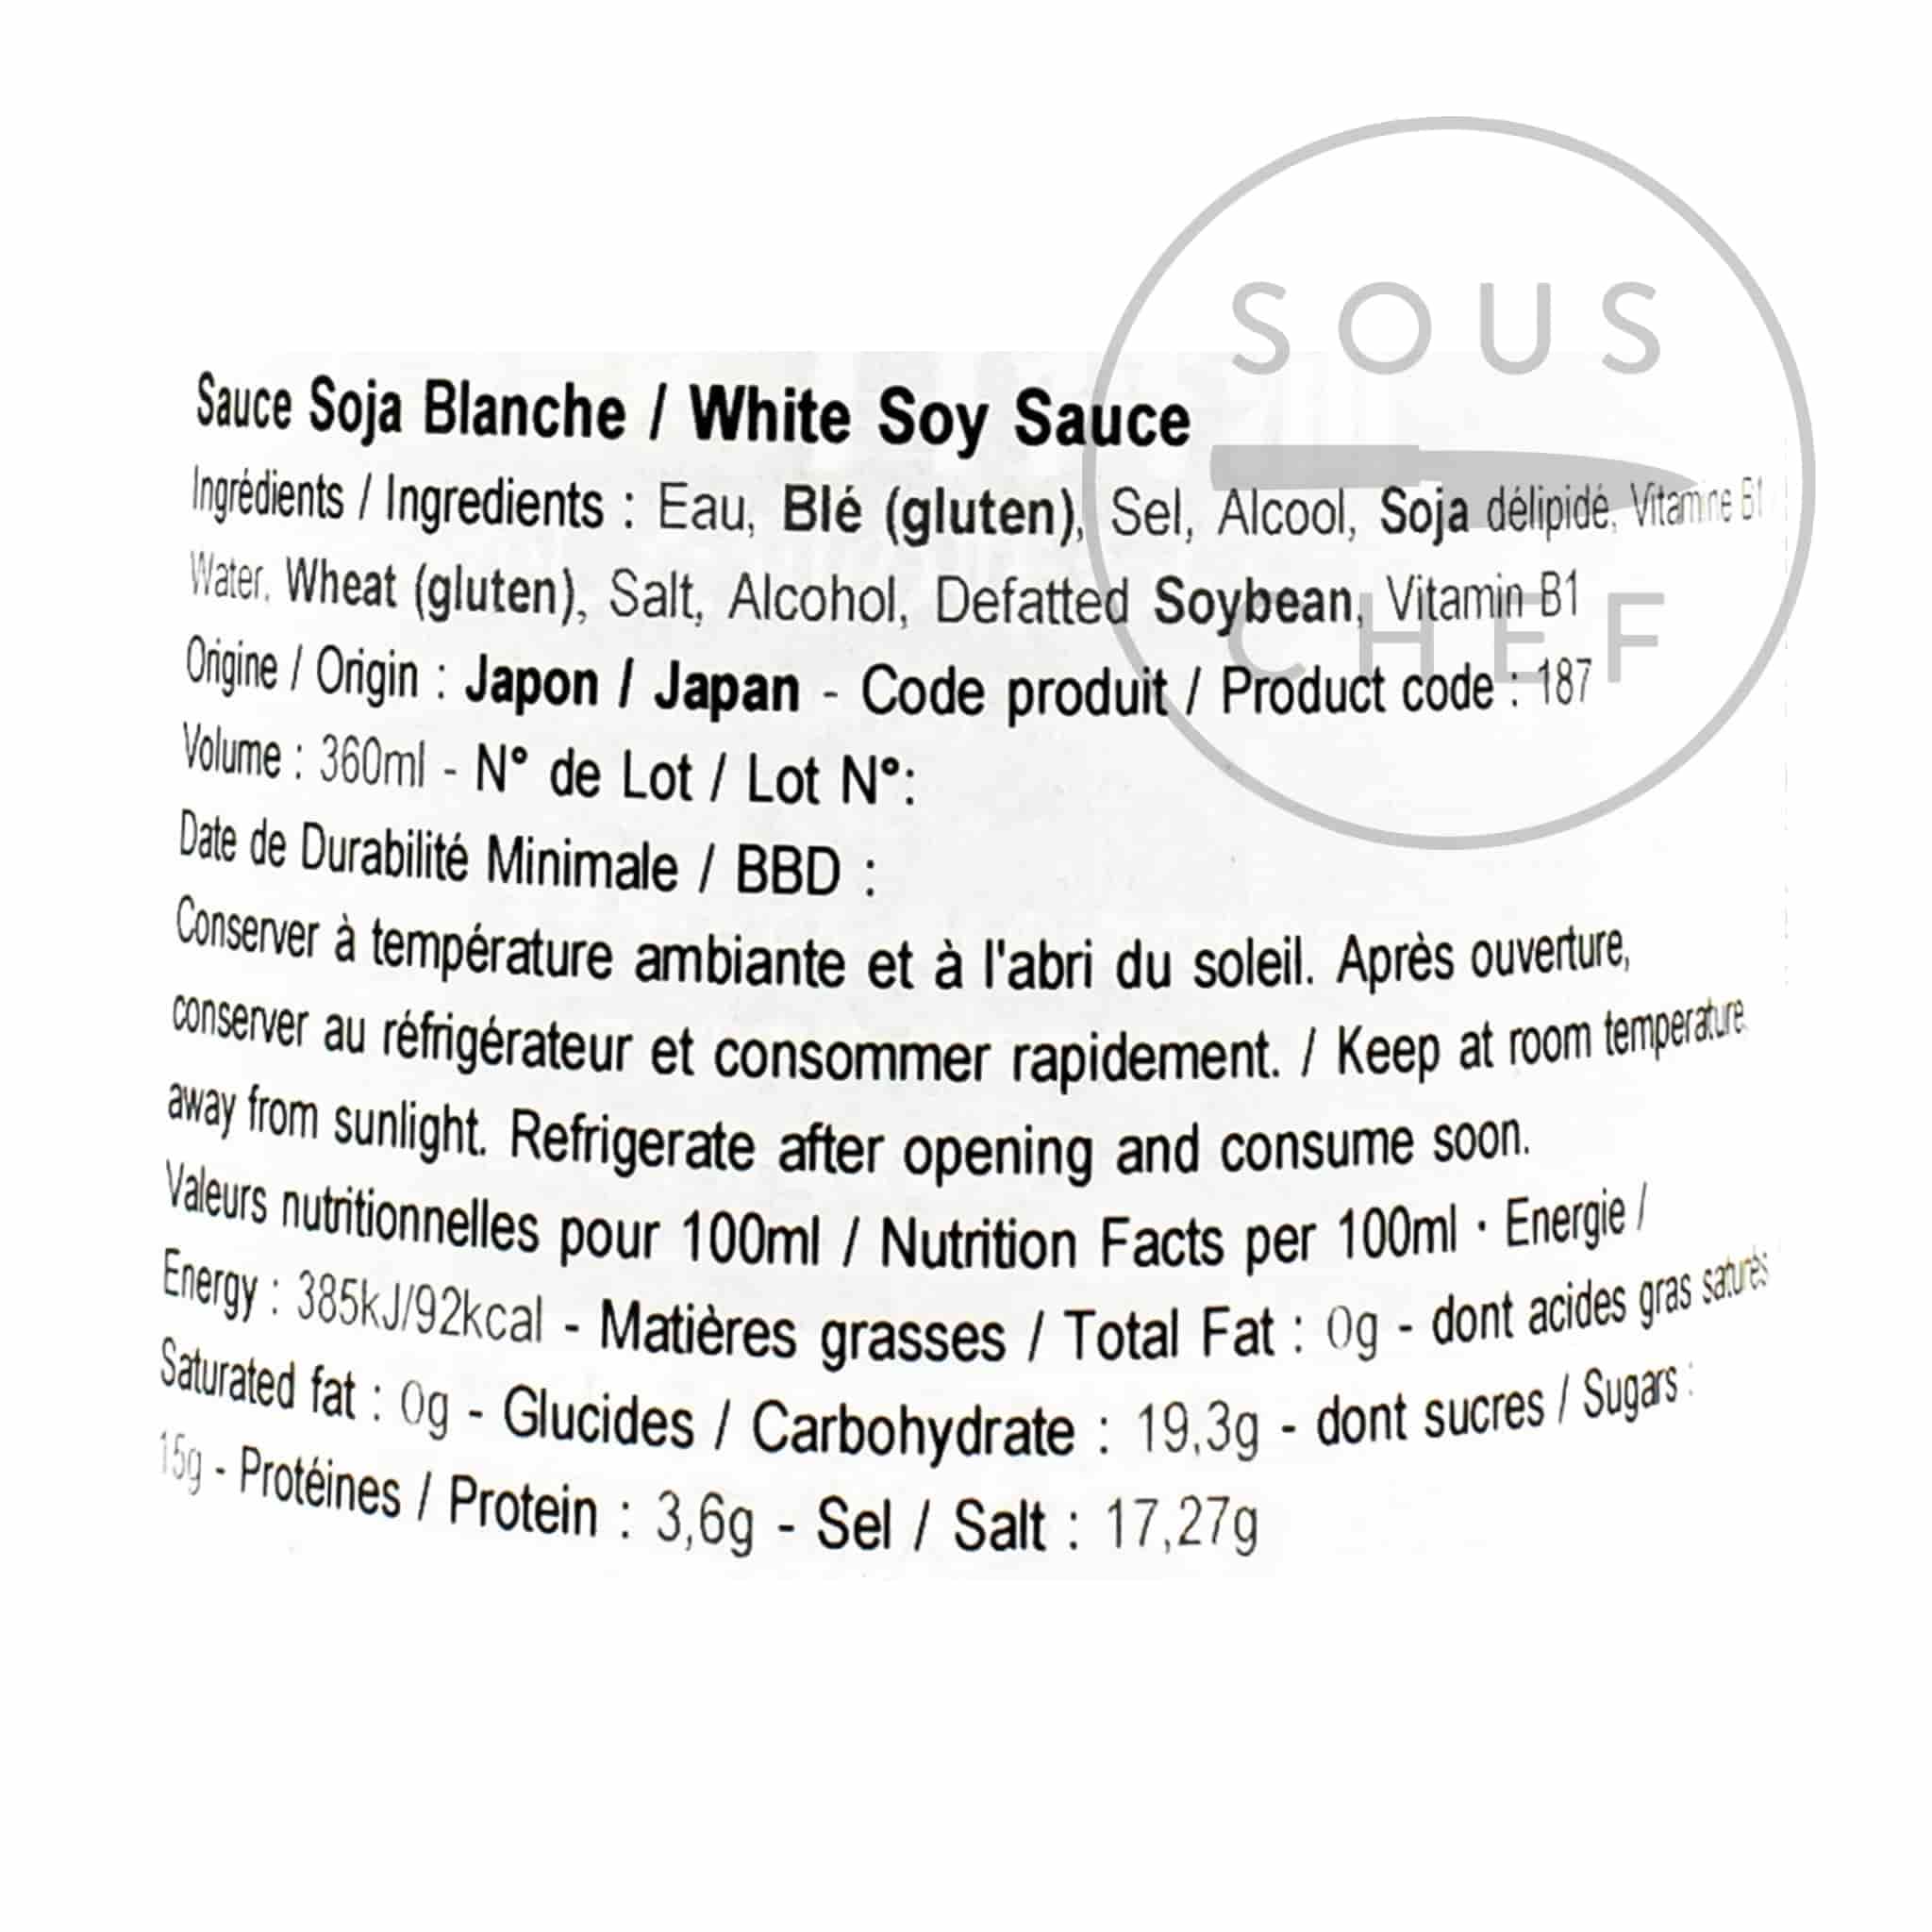 Yamashin White Soy Sauce 360ml